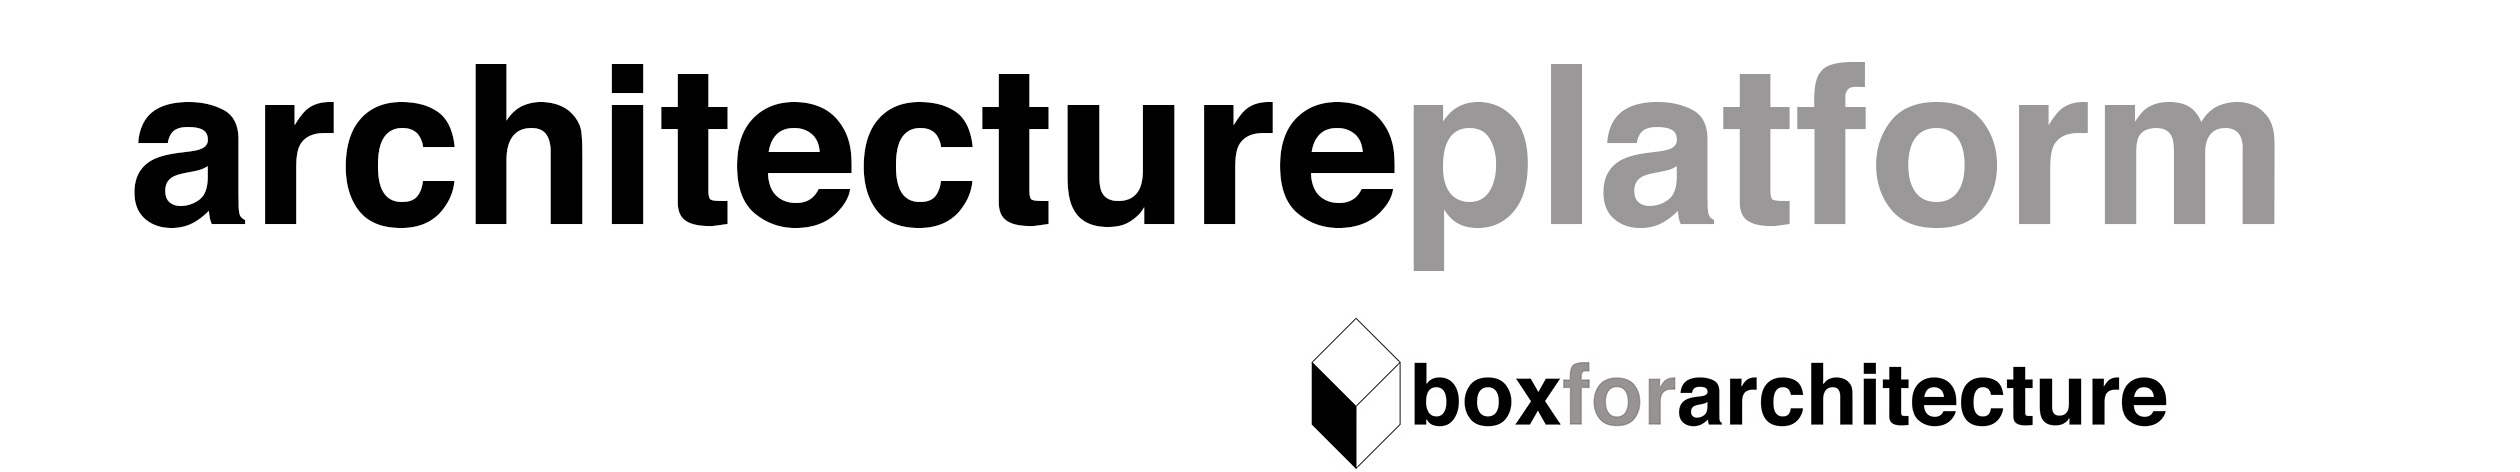 Architecture Platform logo